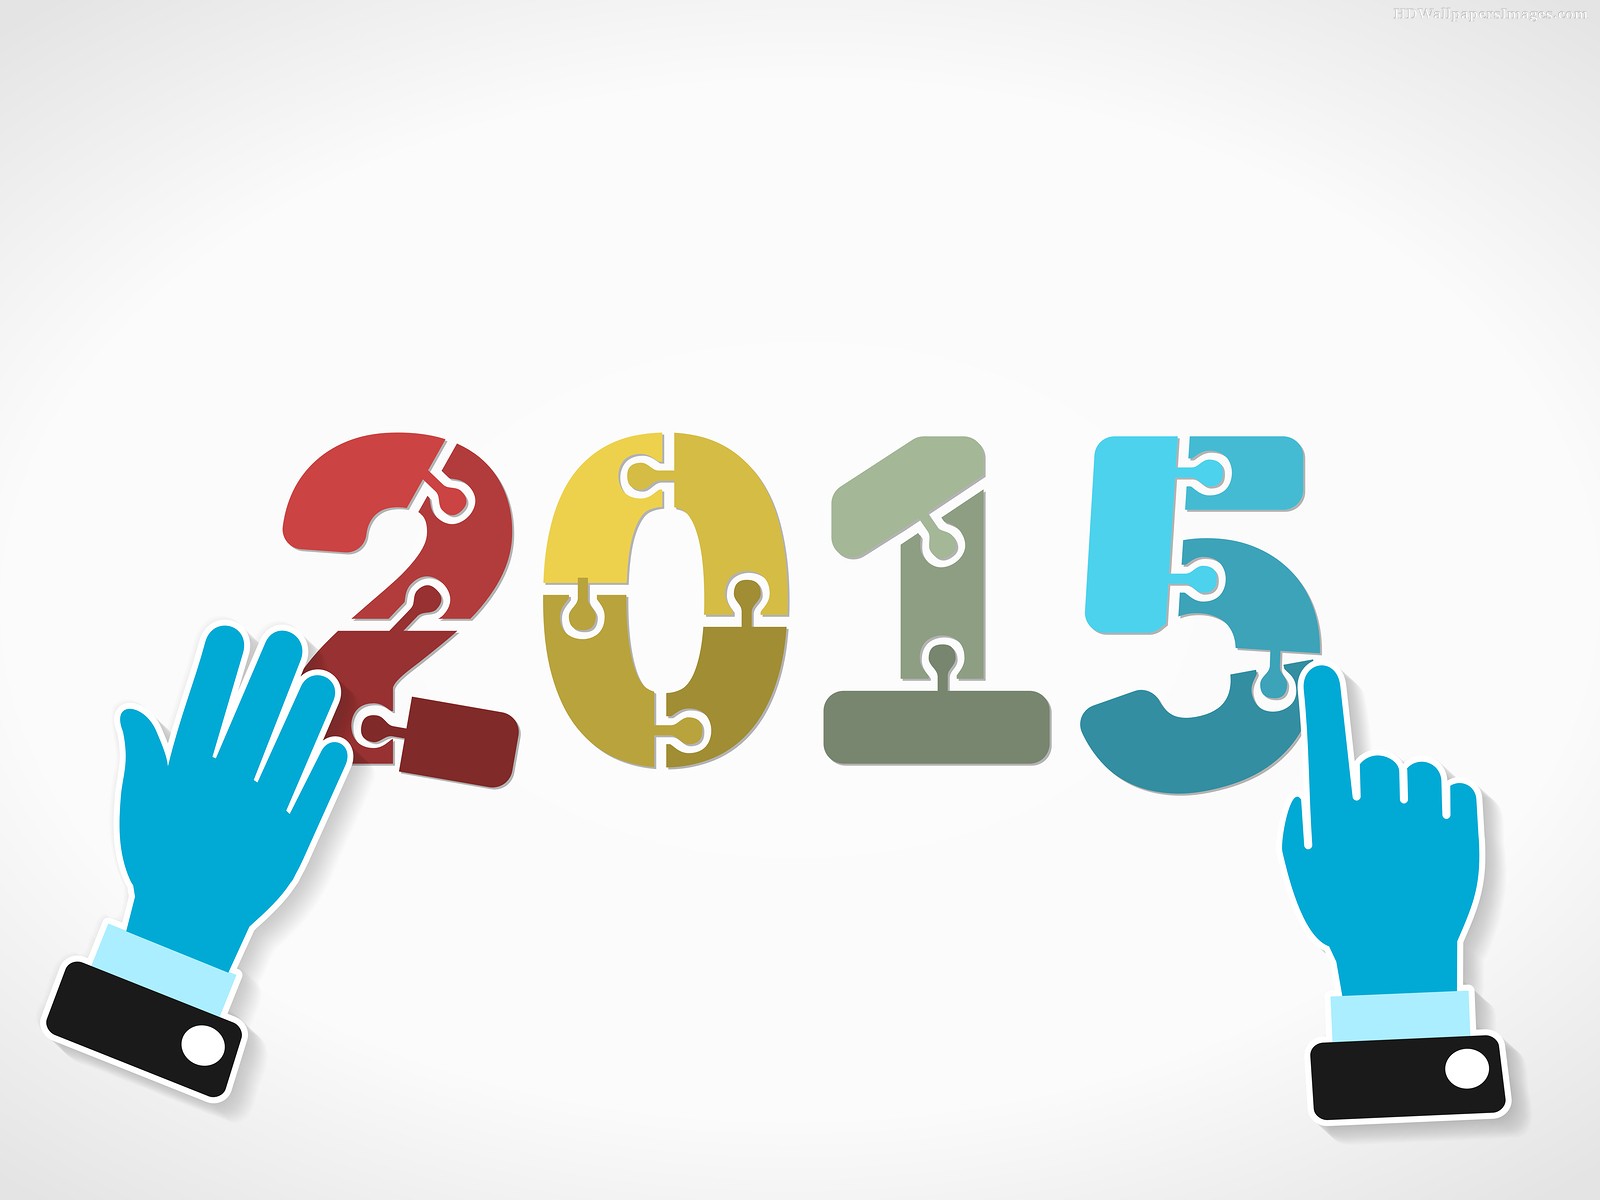 happy new year animated clipart 2015 - photo #20